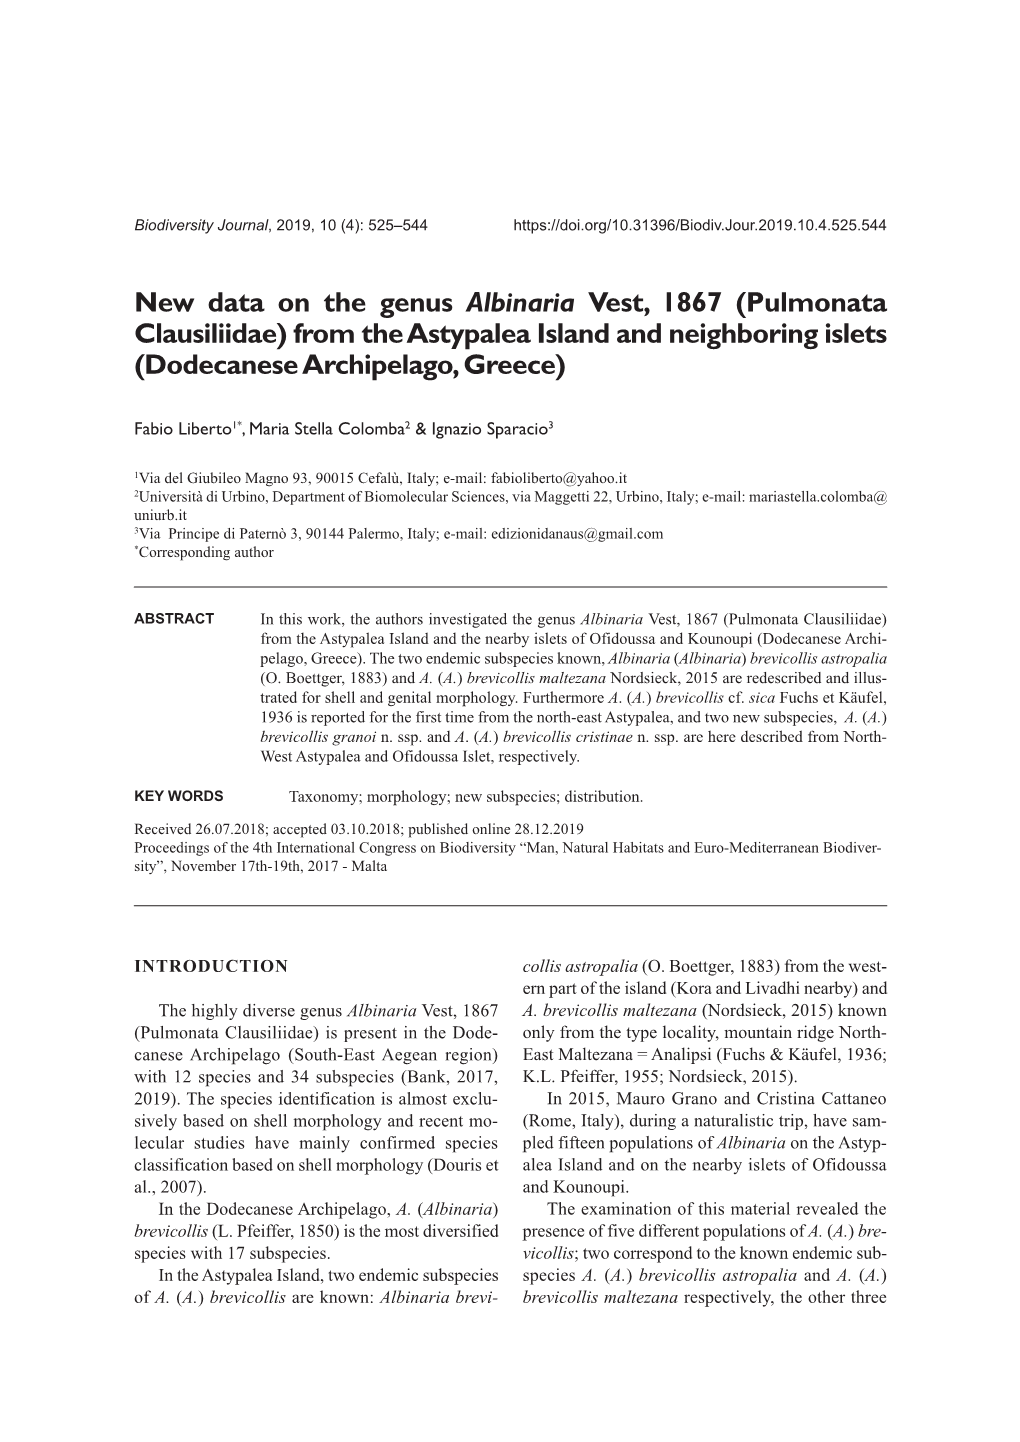 New Data on the Genus Albinaria Vest, 1867 (Pulmonata Clausiliidae) from the Astypalea Island and Neighboring Islets (Dodecanese Archipelago, Greece)